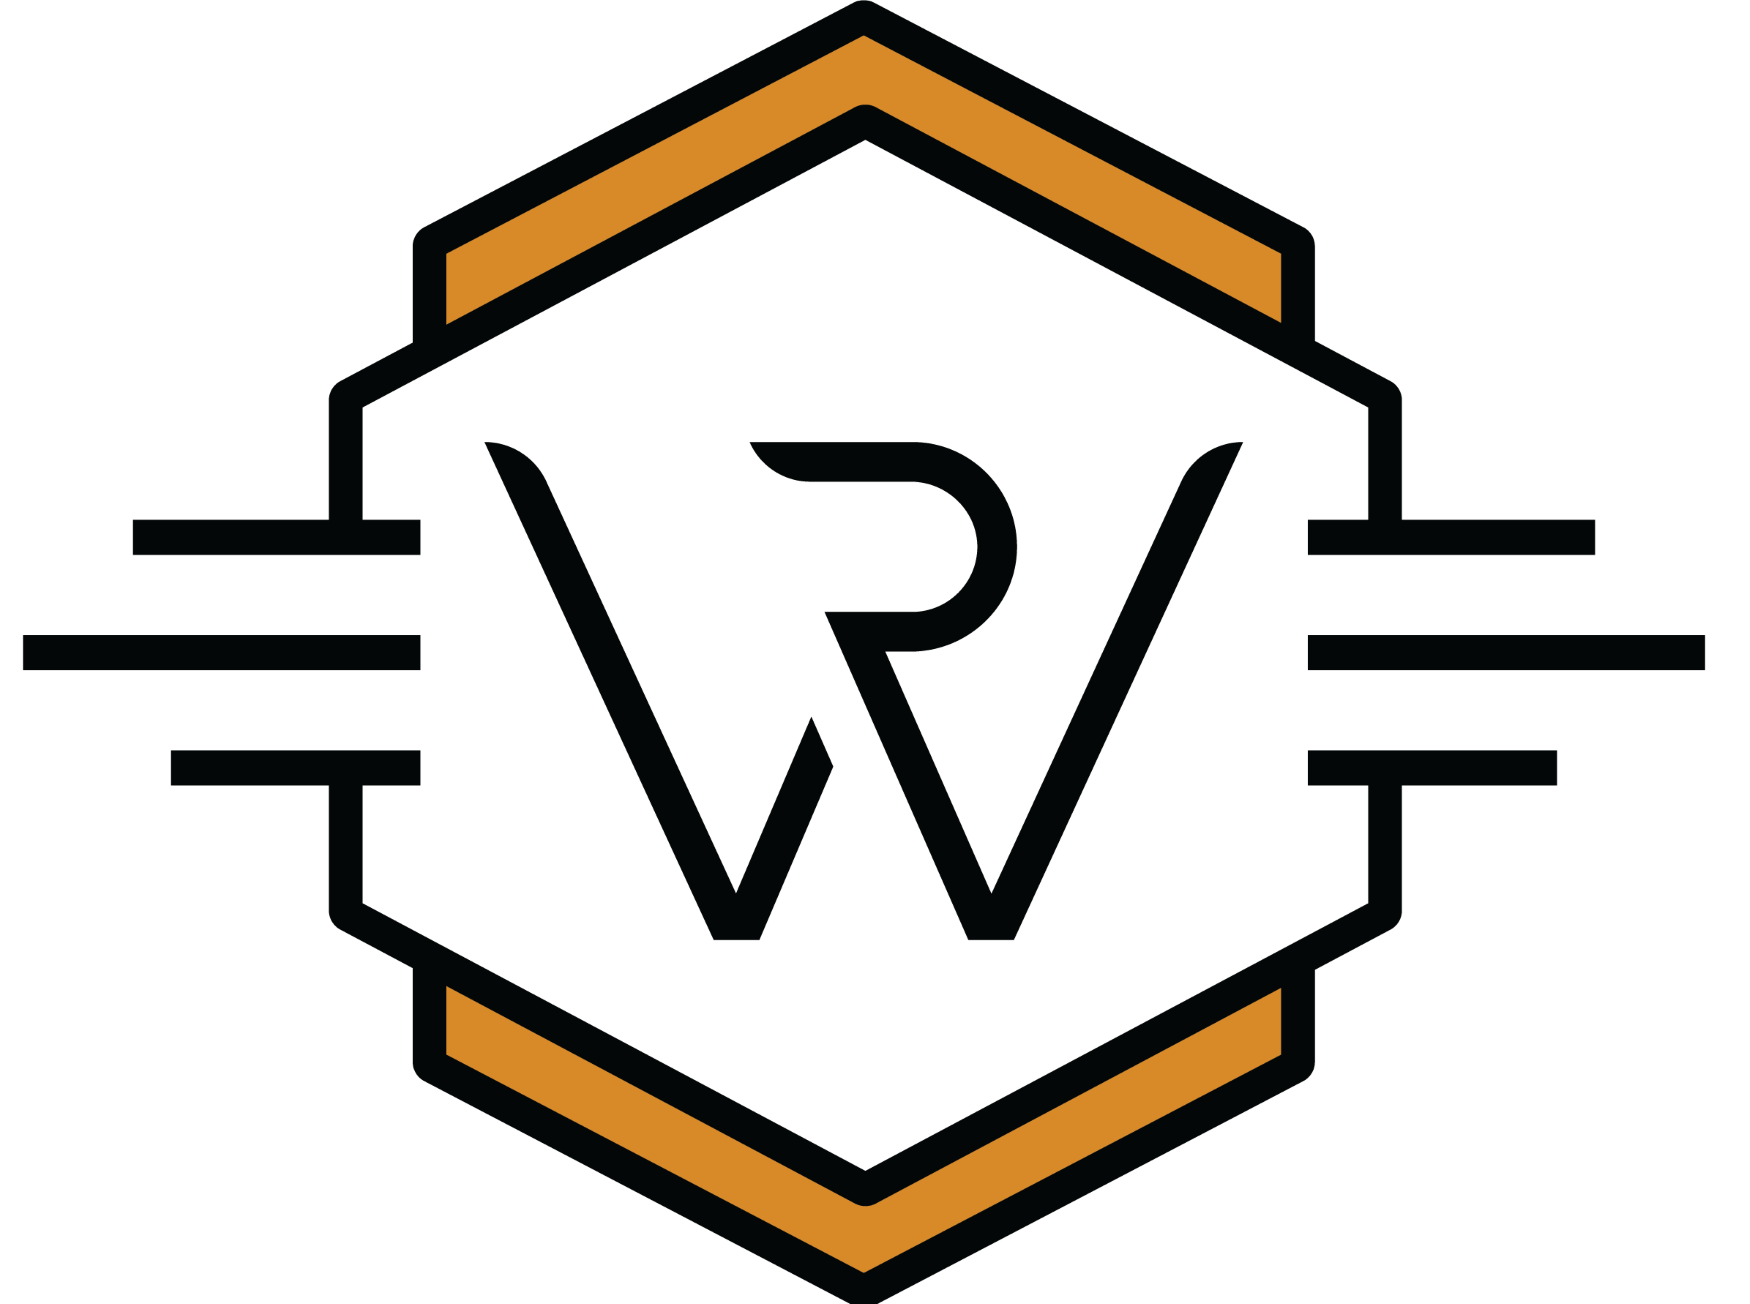 RW Professional Painting, LLC Logo